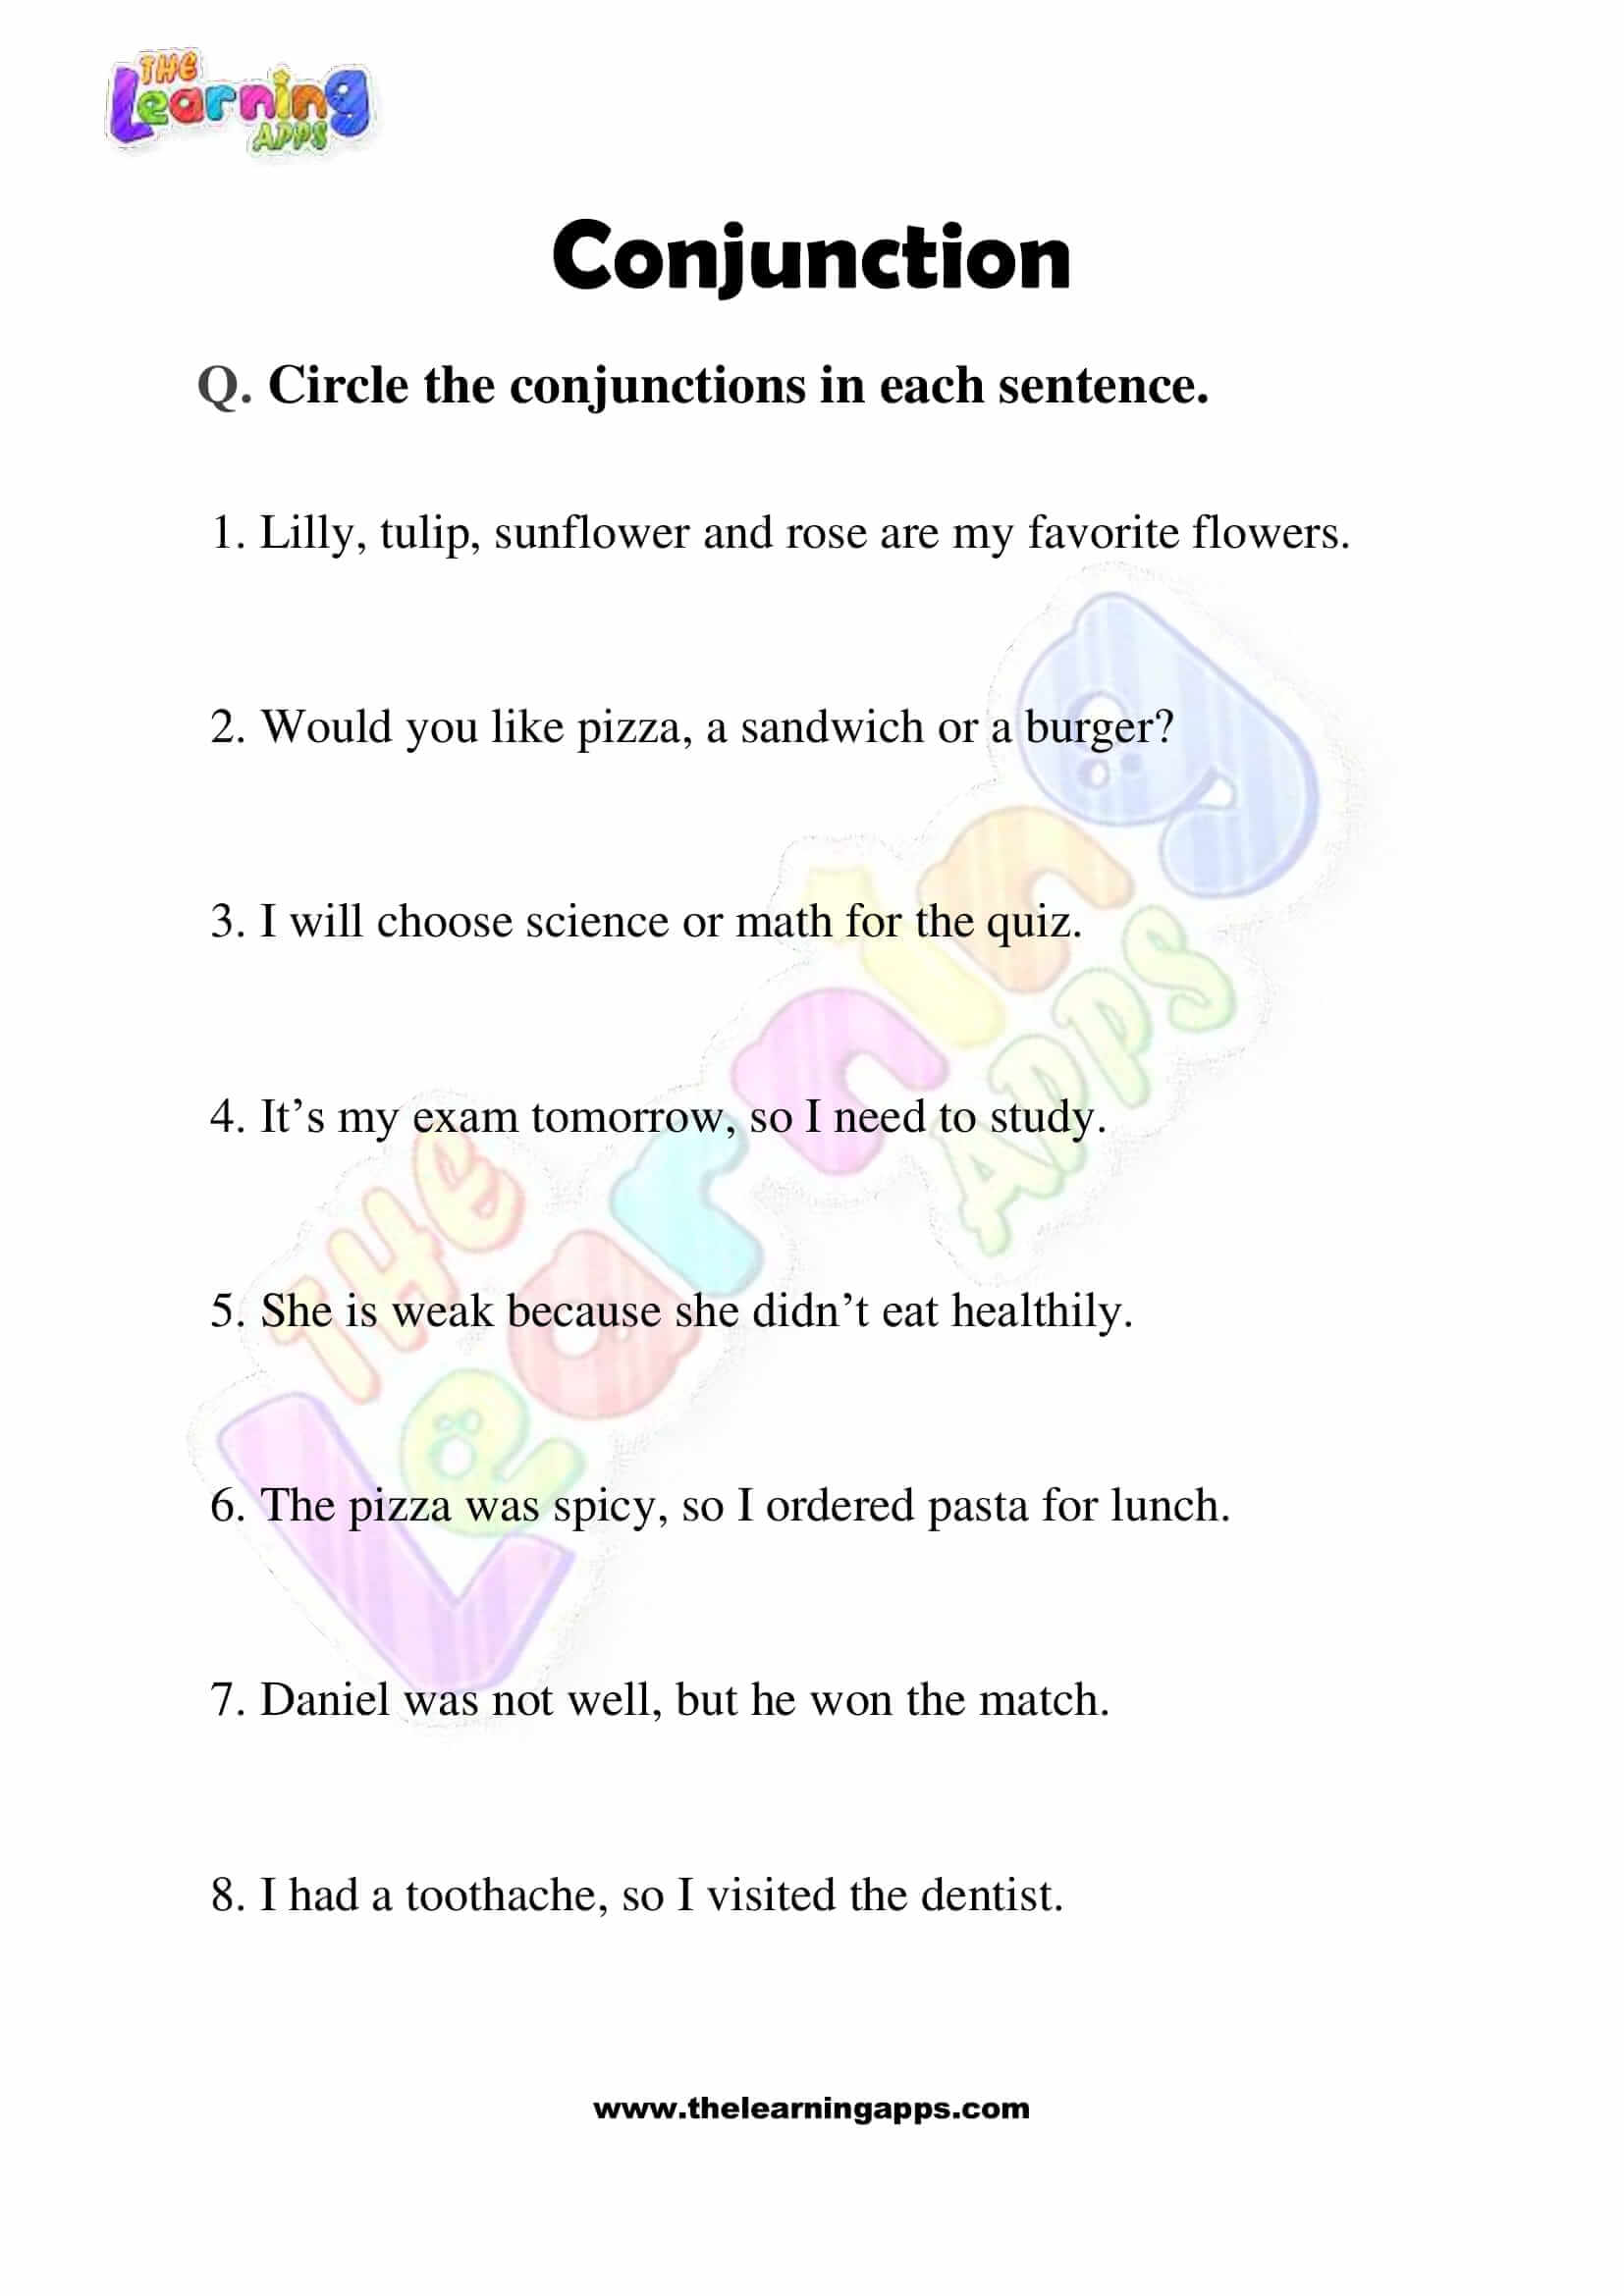 Conjunction Worksheets - Grade 3 - Activity 3